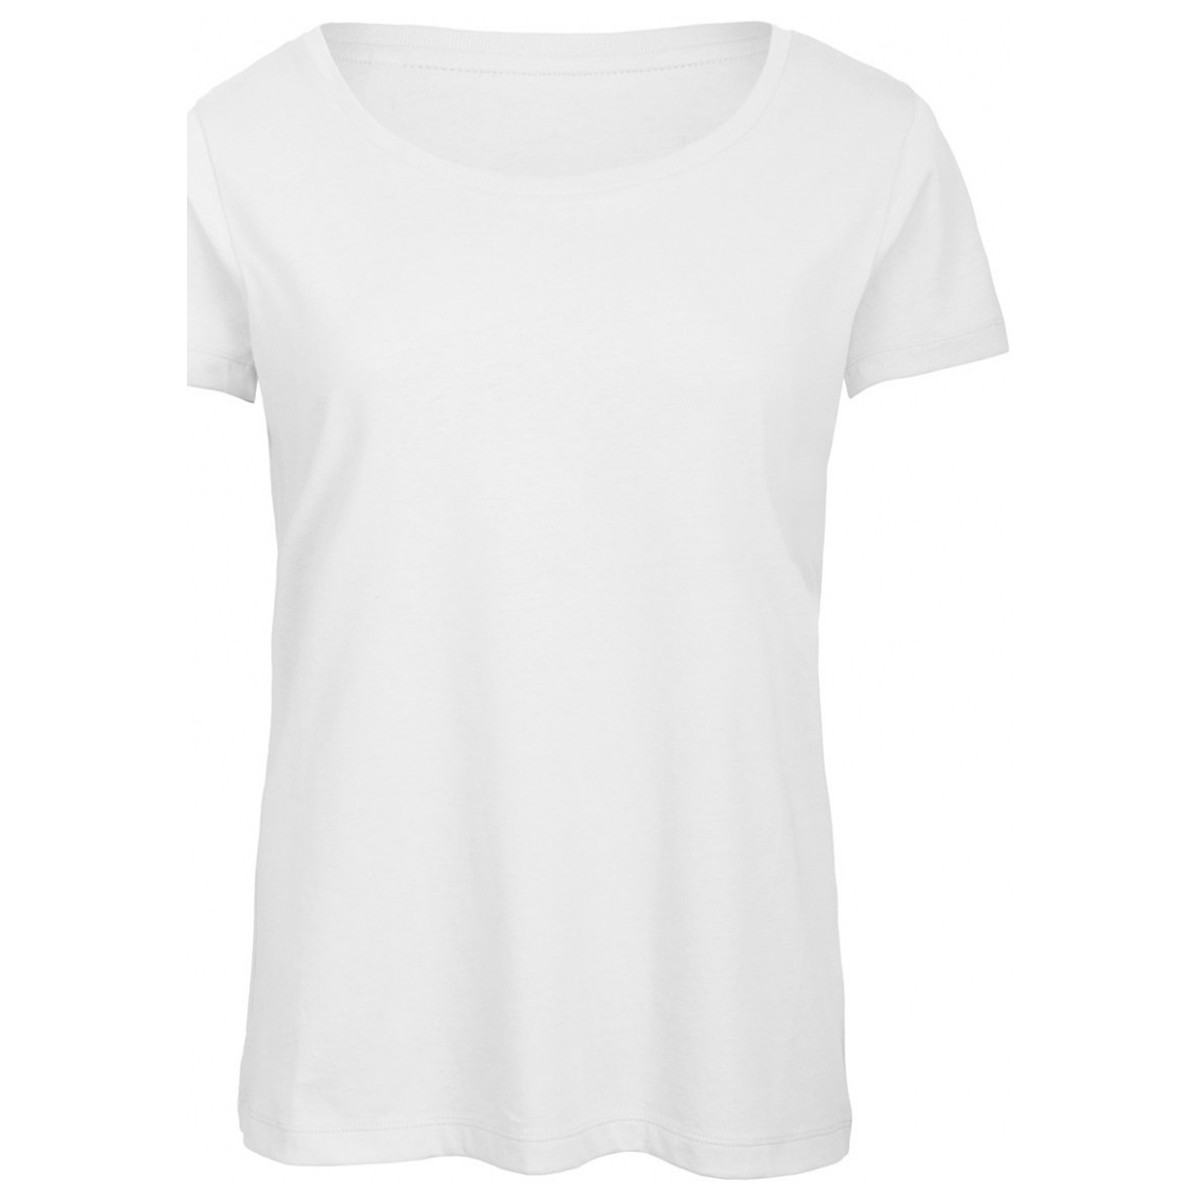 Vêtements Femme T-shirts manches longues B And C TW056 Blanc